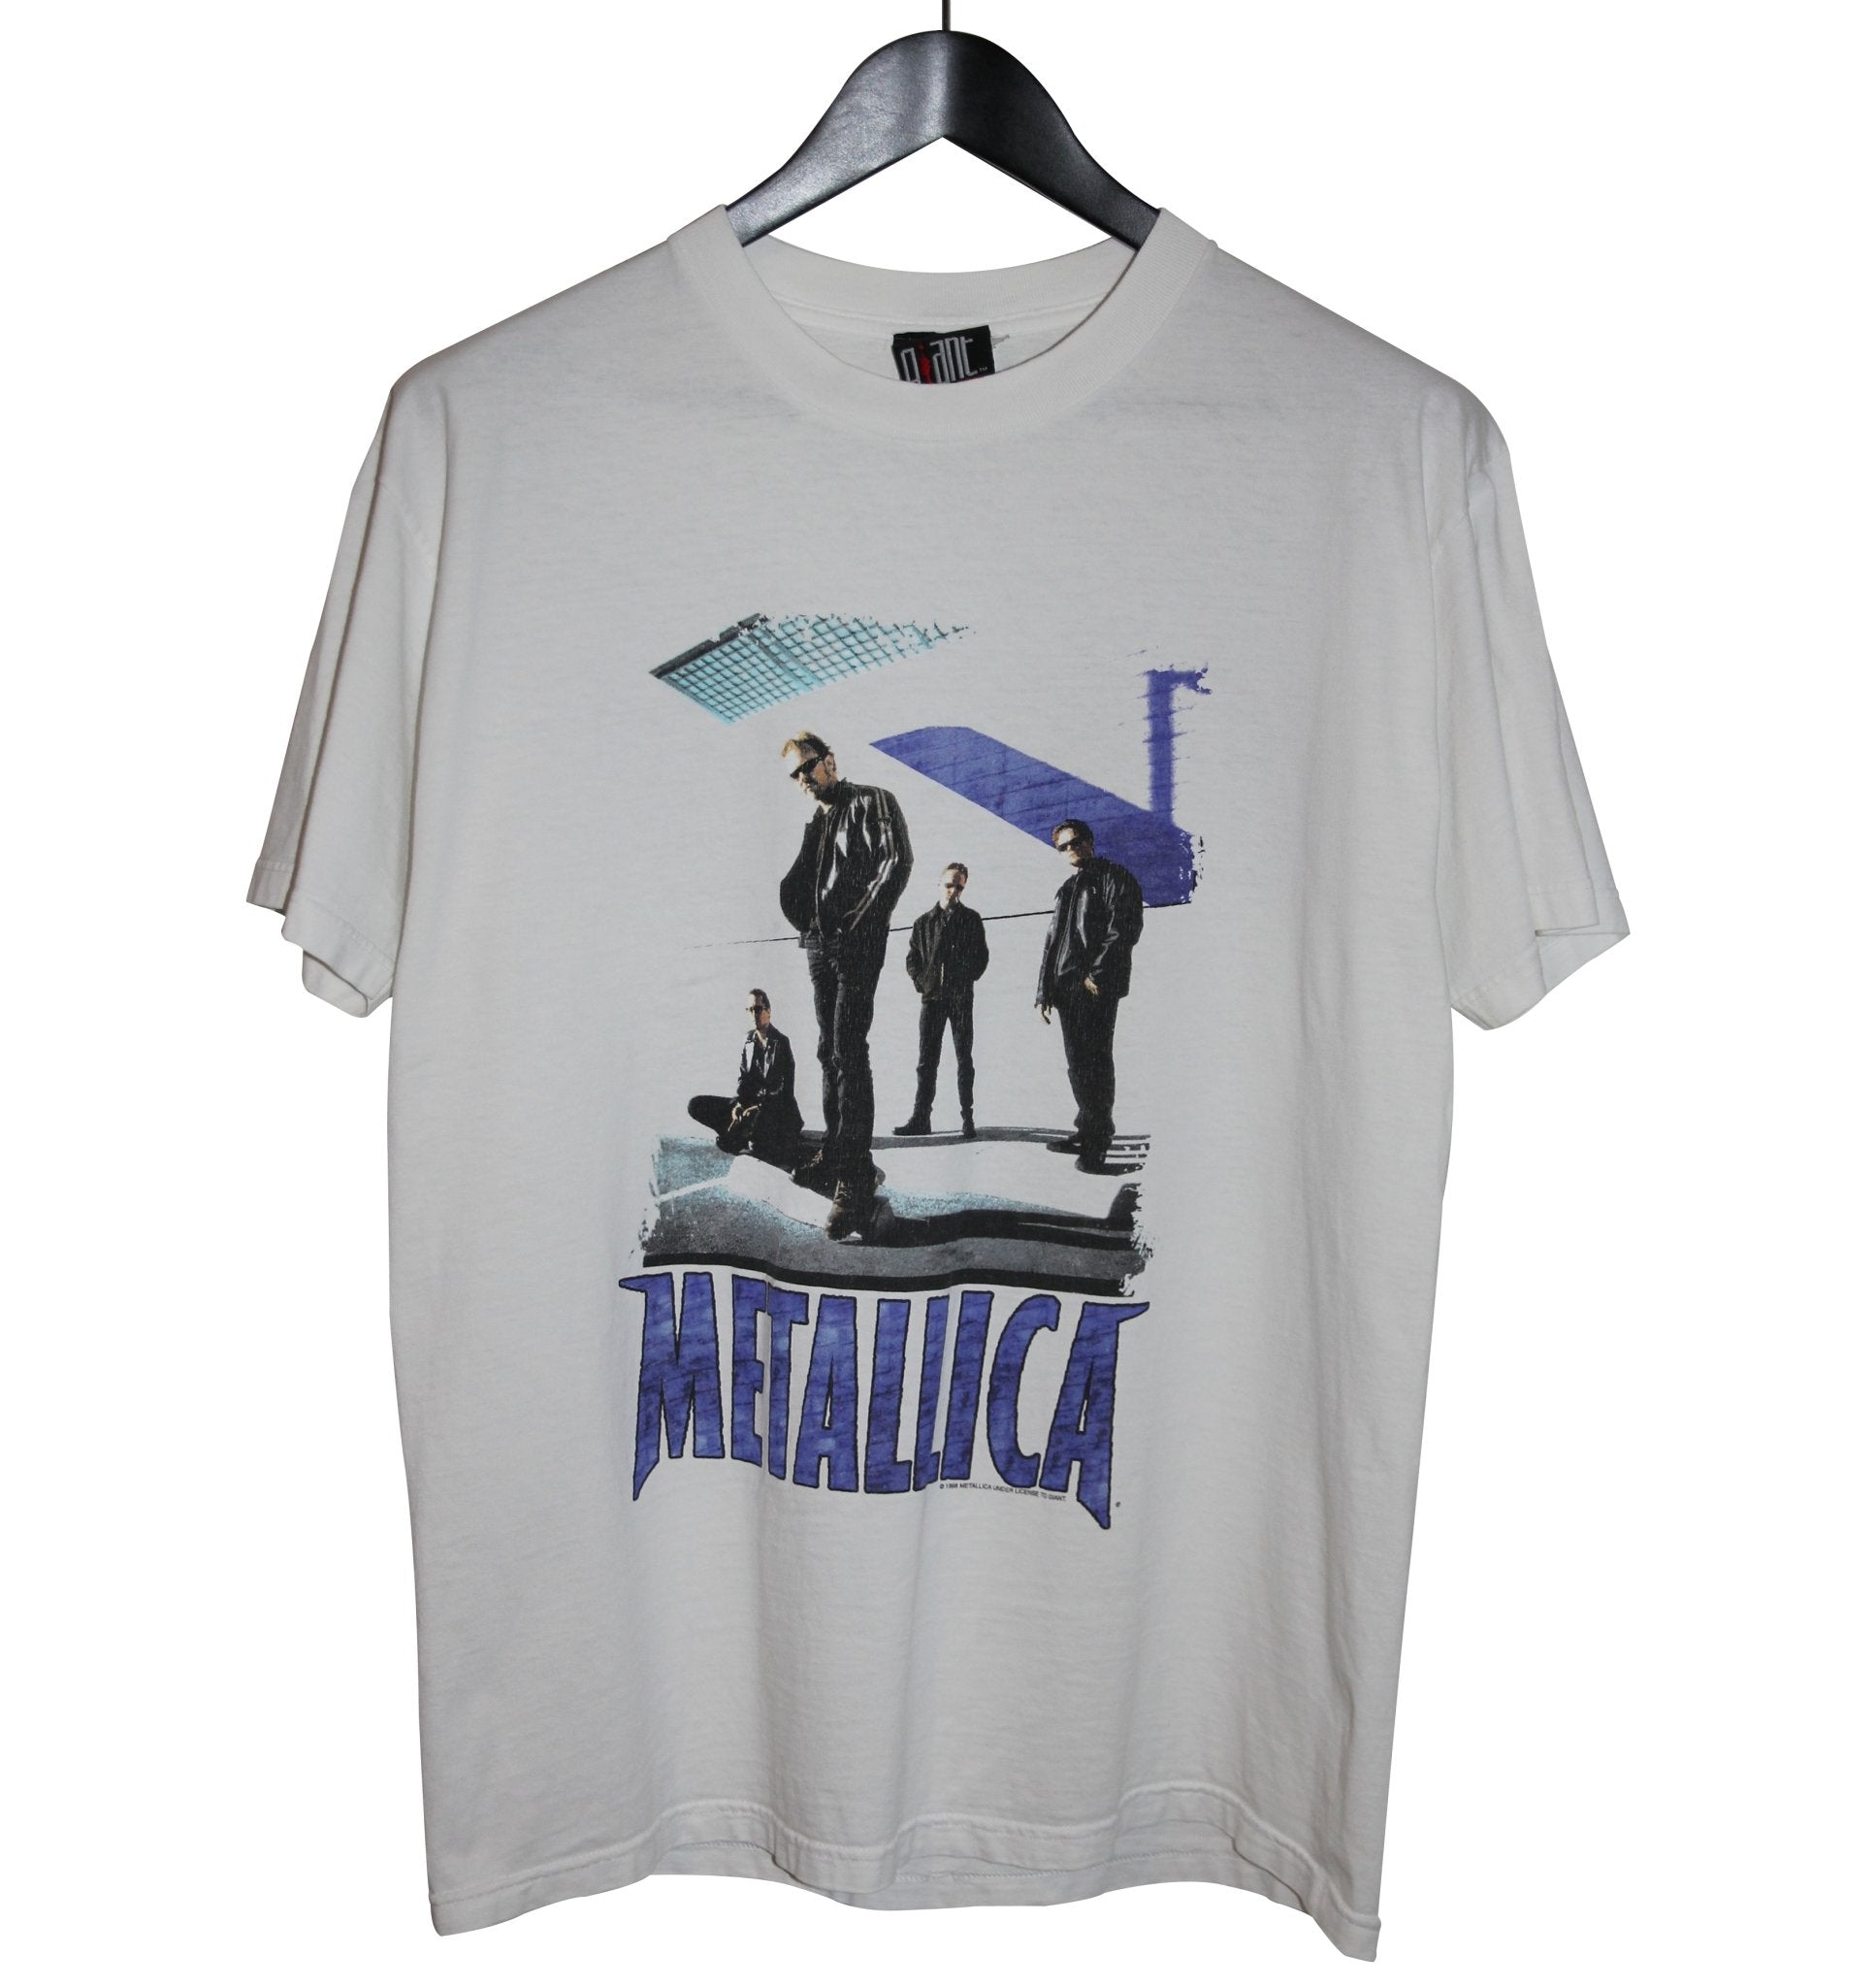 Metallica 1998 Reload Album Shirt - Faded AU